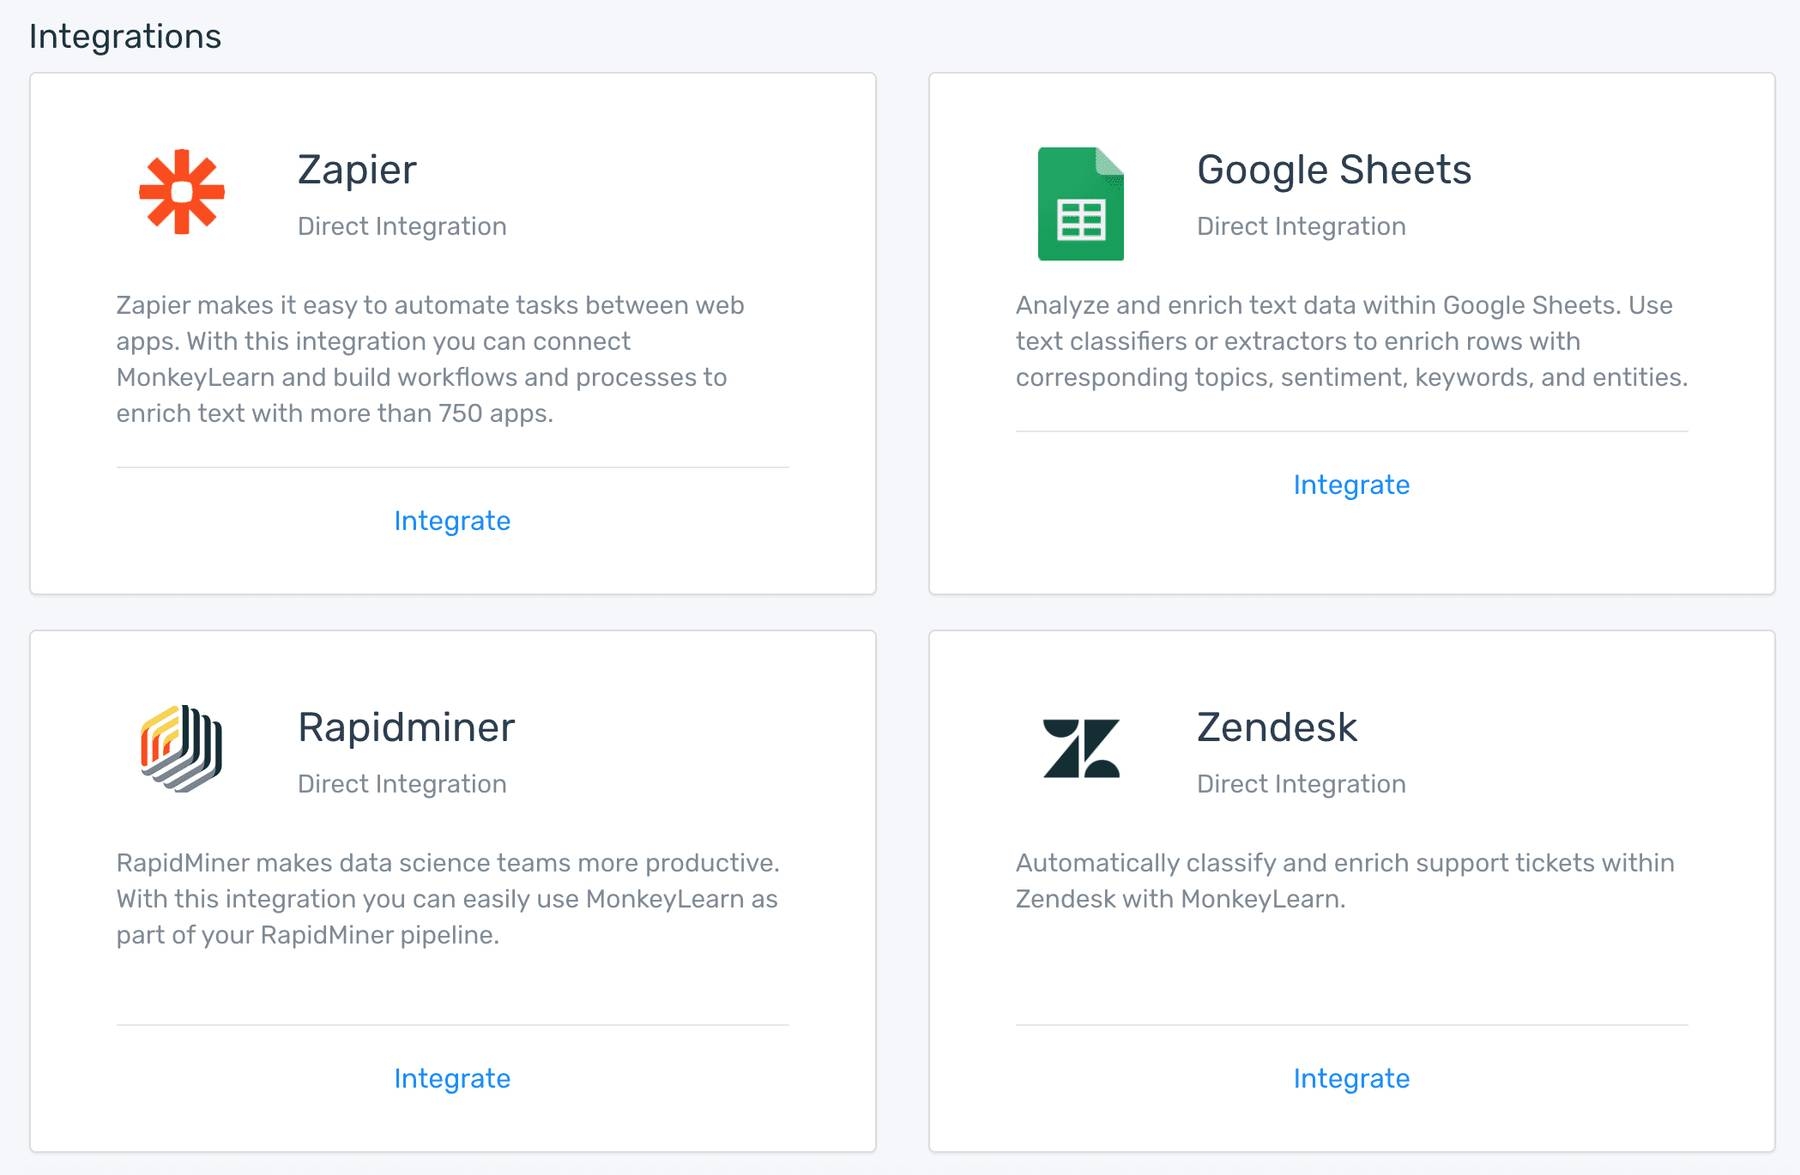 available integrations: Zapier, Rapidminer, Google Sheets, Zendesk